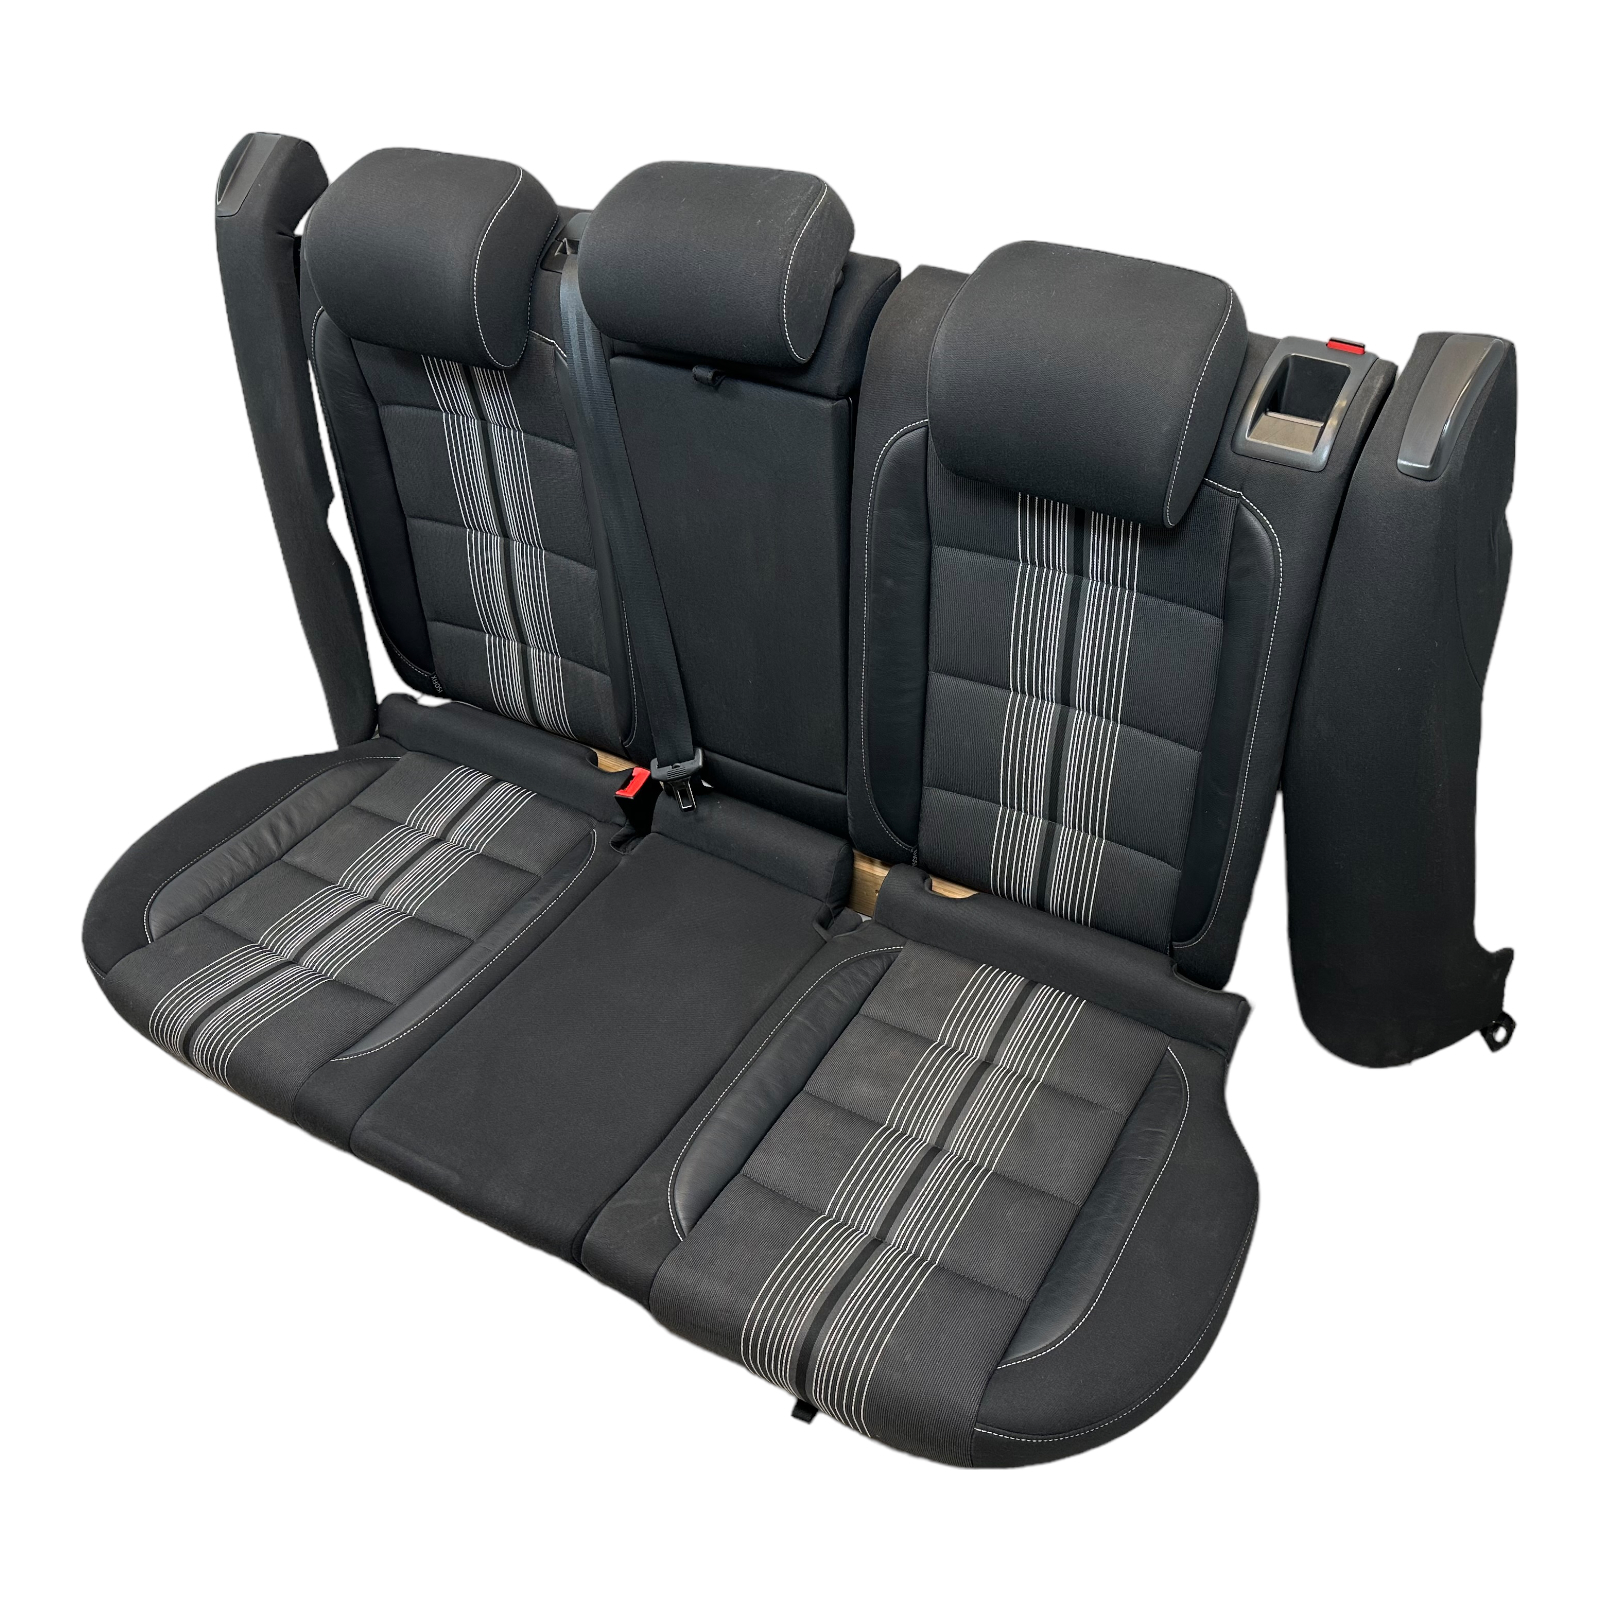 Rücksitzbank Rückbank Sitzbank Leder VW Passat CC 357 schwarz ZU, Sitze,  Rückbänke, Innenraum und Einrichtung